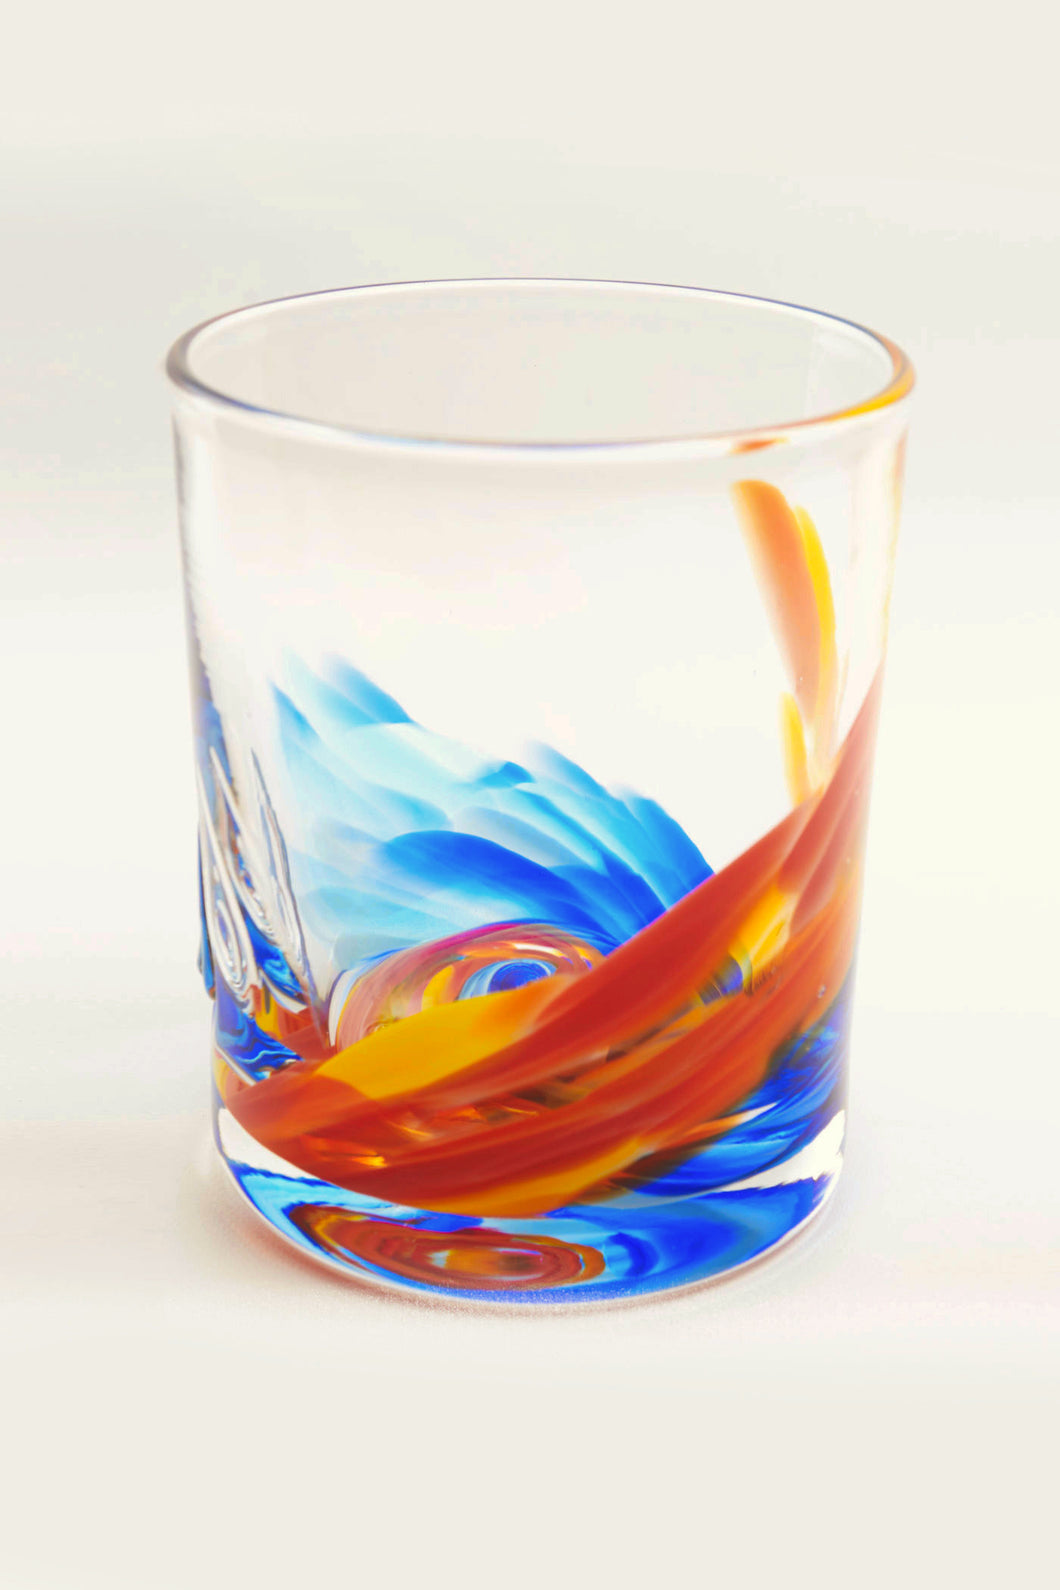 Tye-Dye Highball Glass in Orange/Blue(pre-order item)